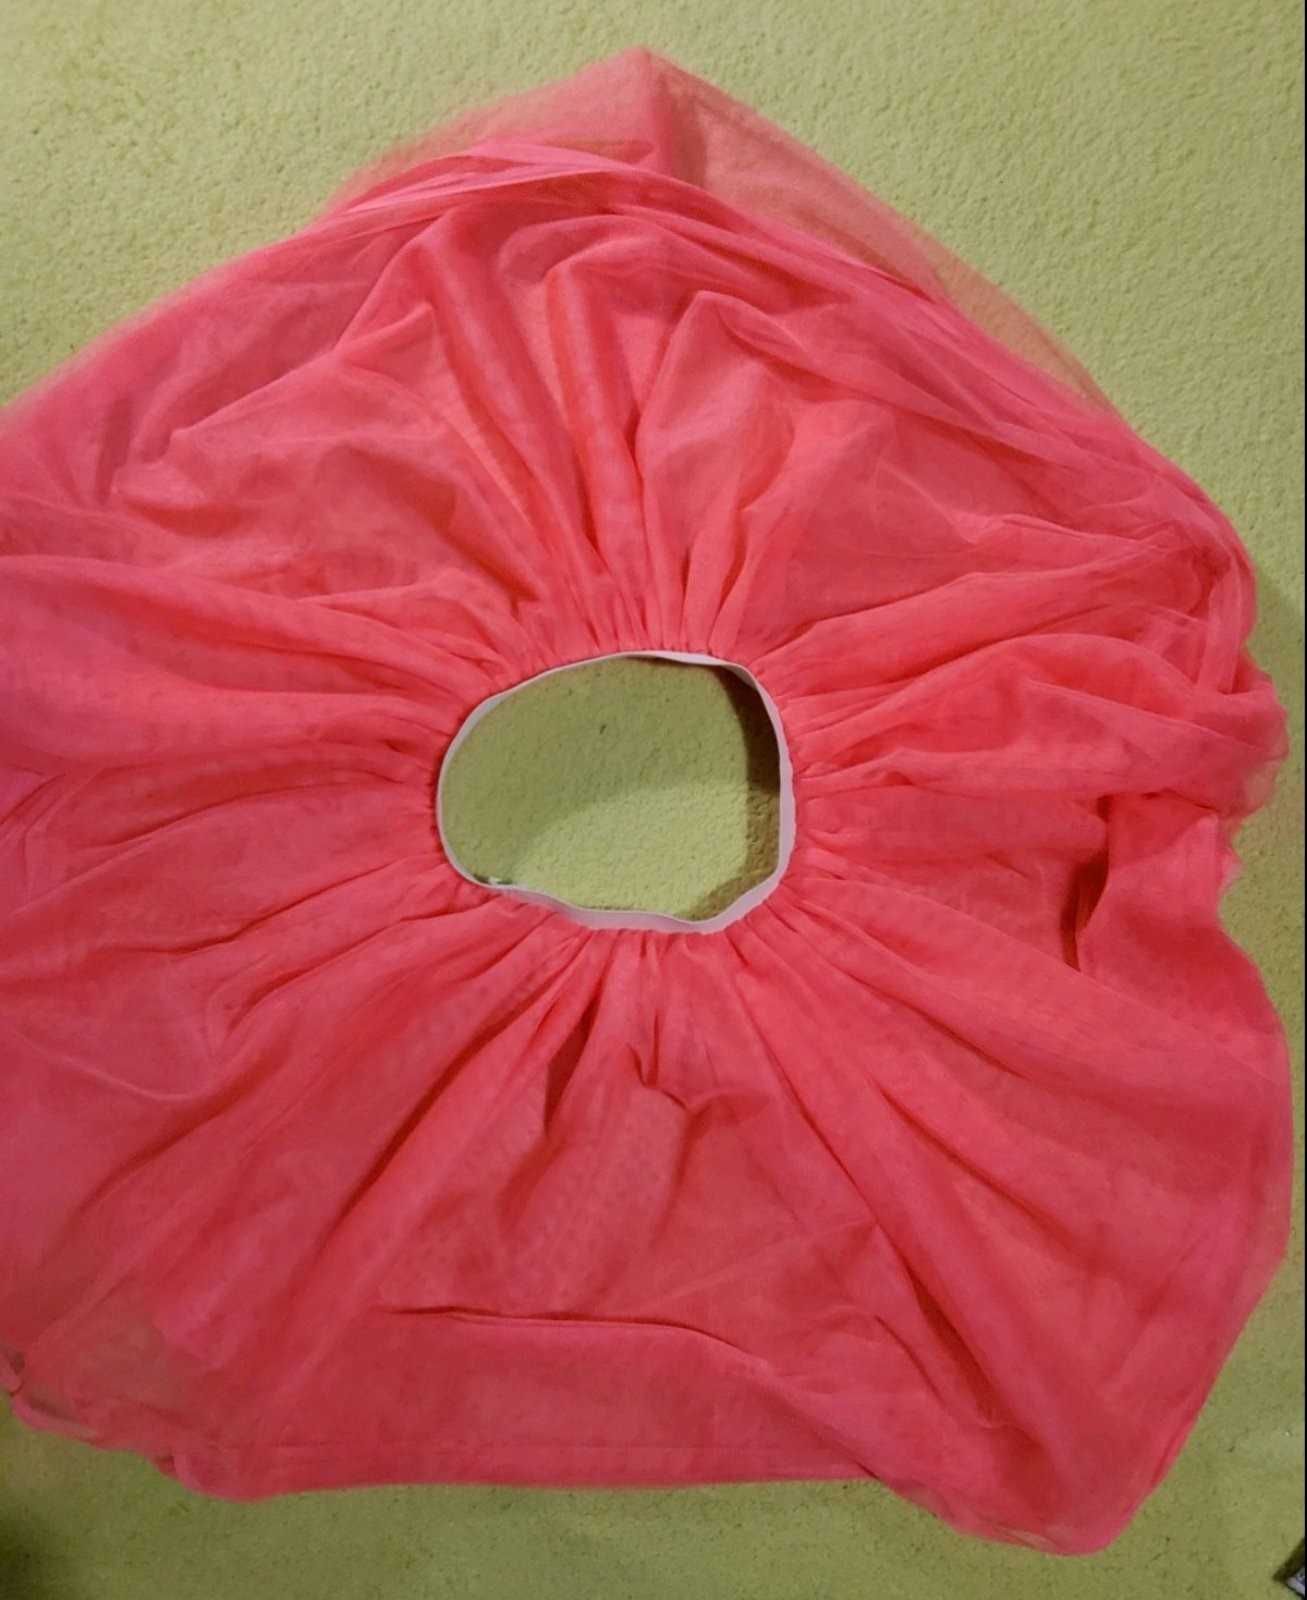 Розовая юбка для занятий спортом и танцами.